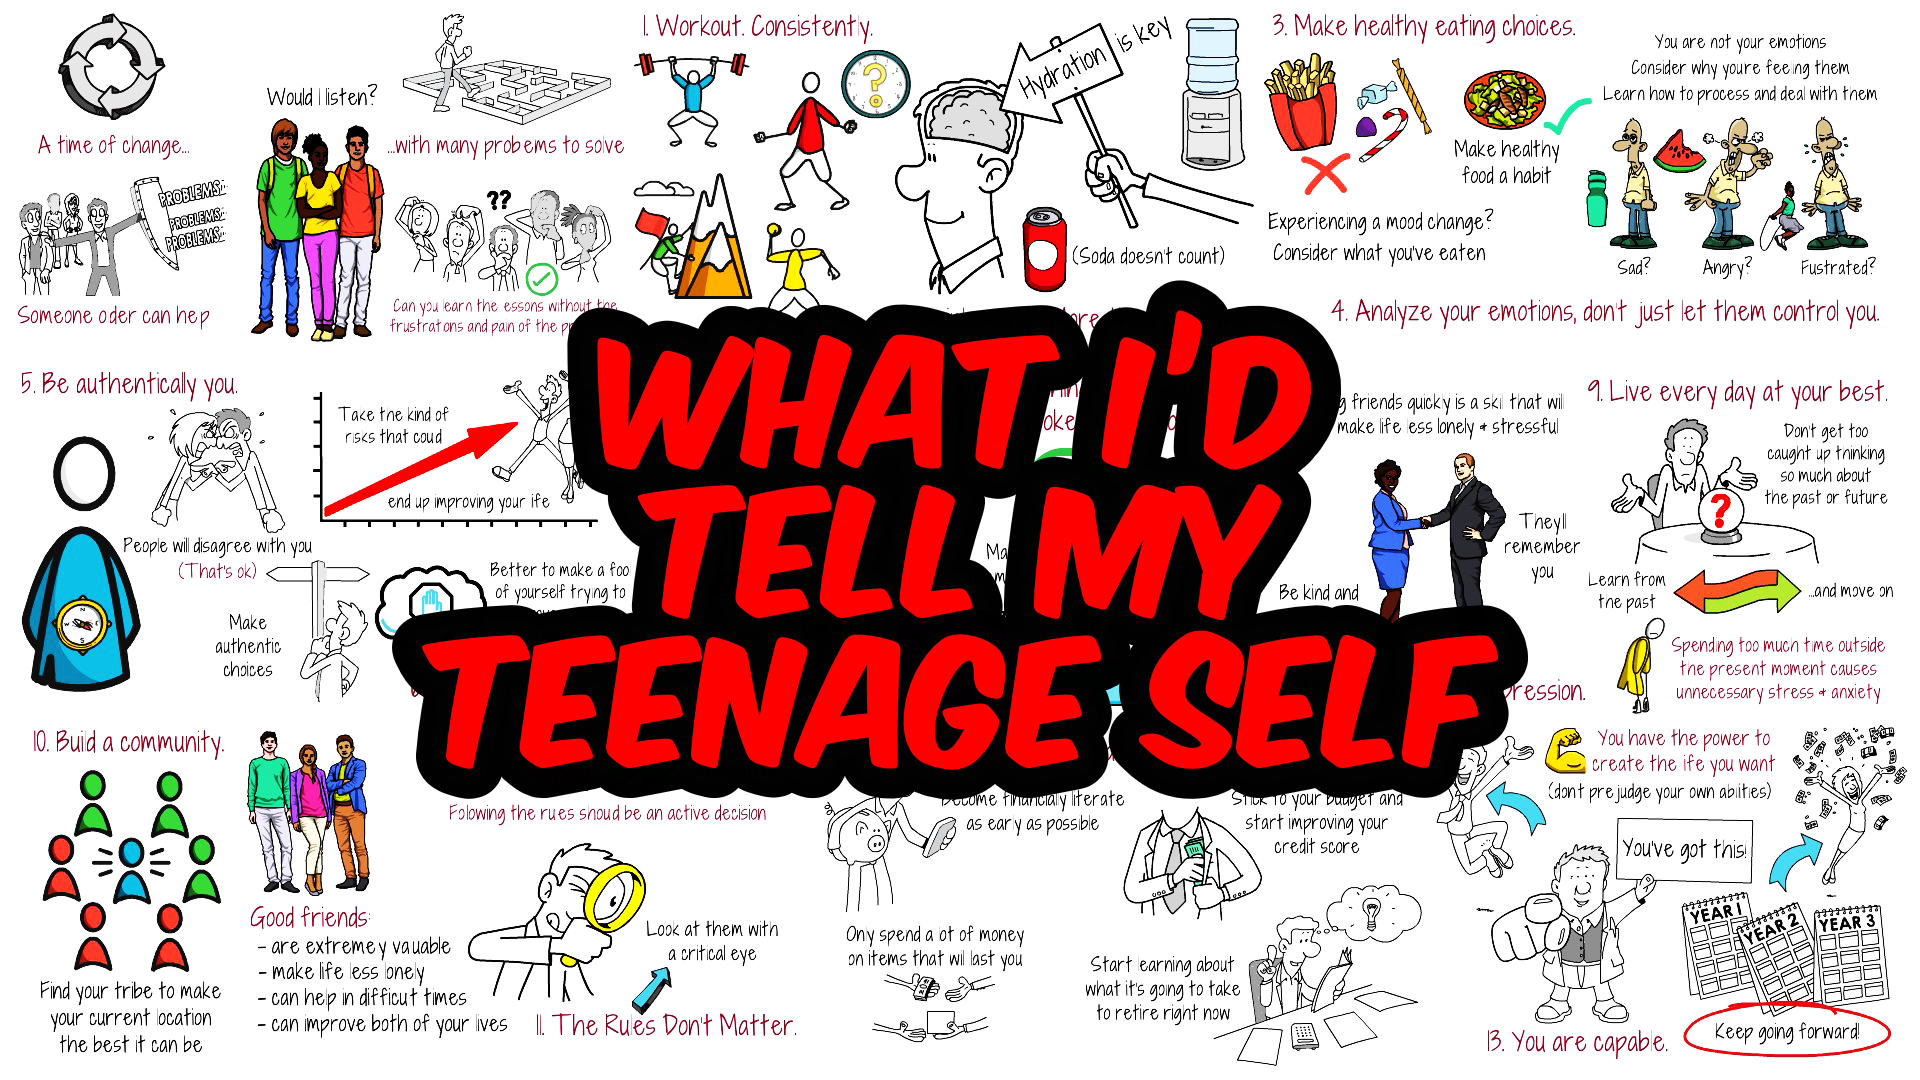 13 Life Lessons I’d Tell My Teenage Self